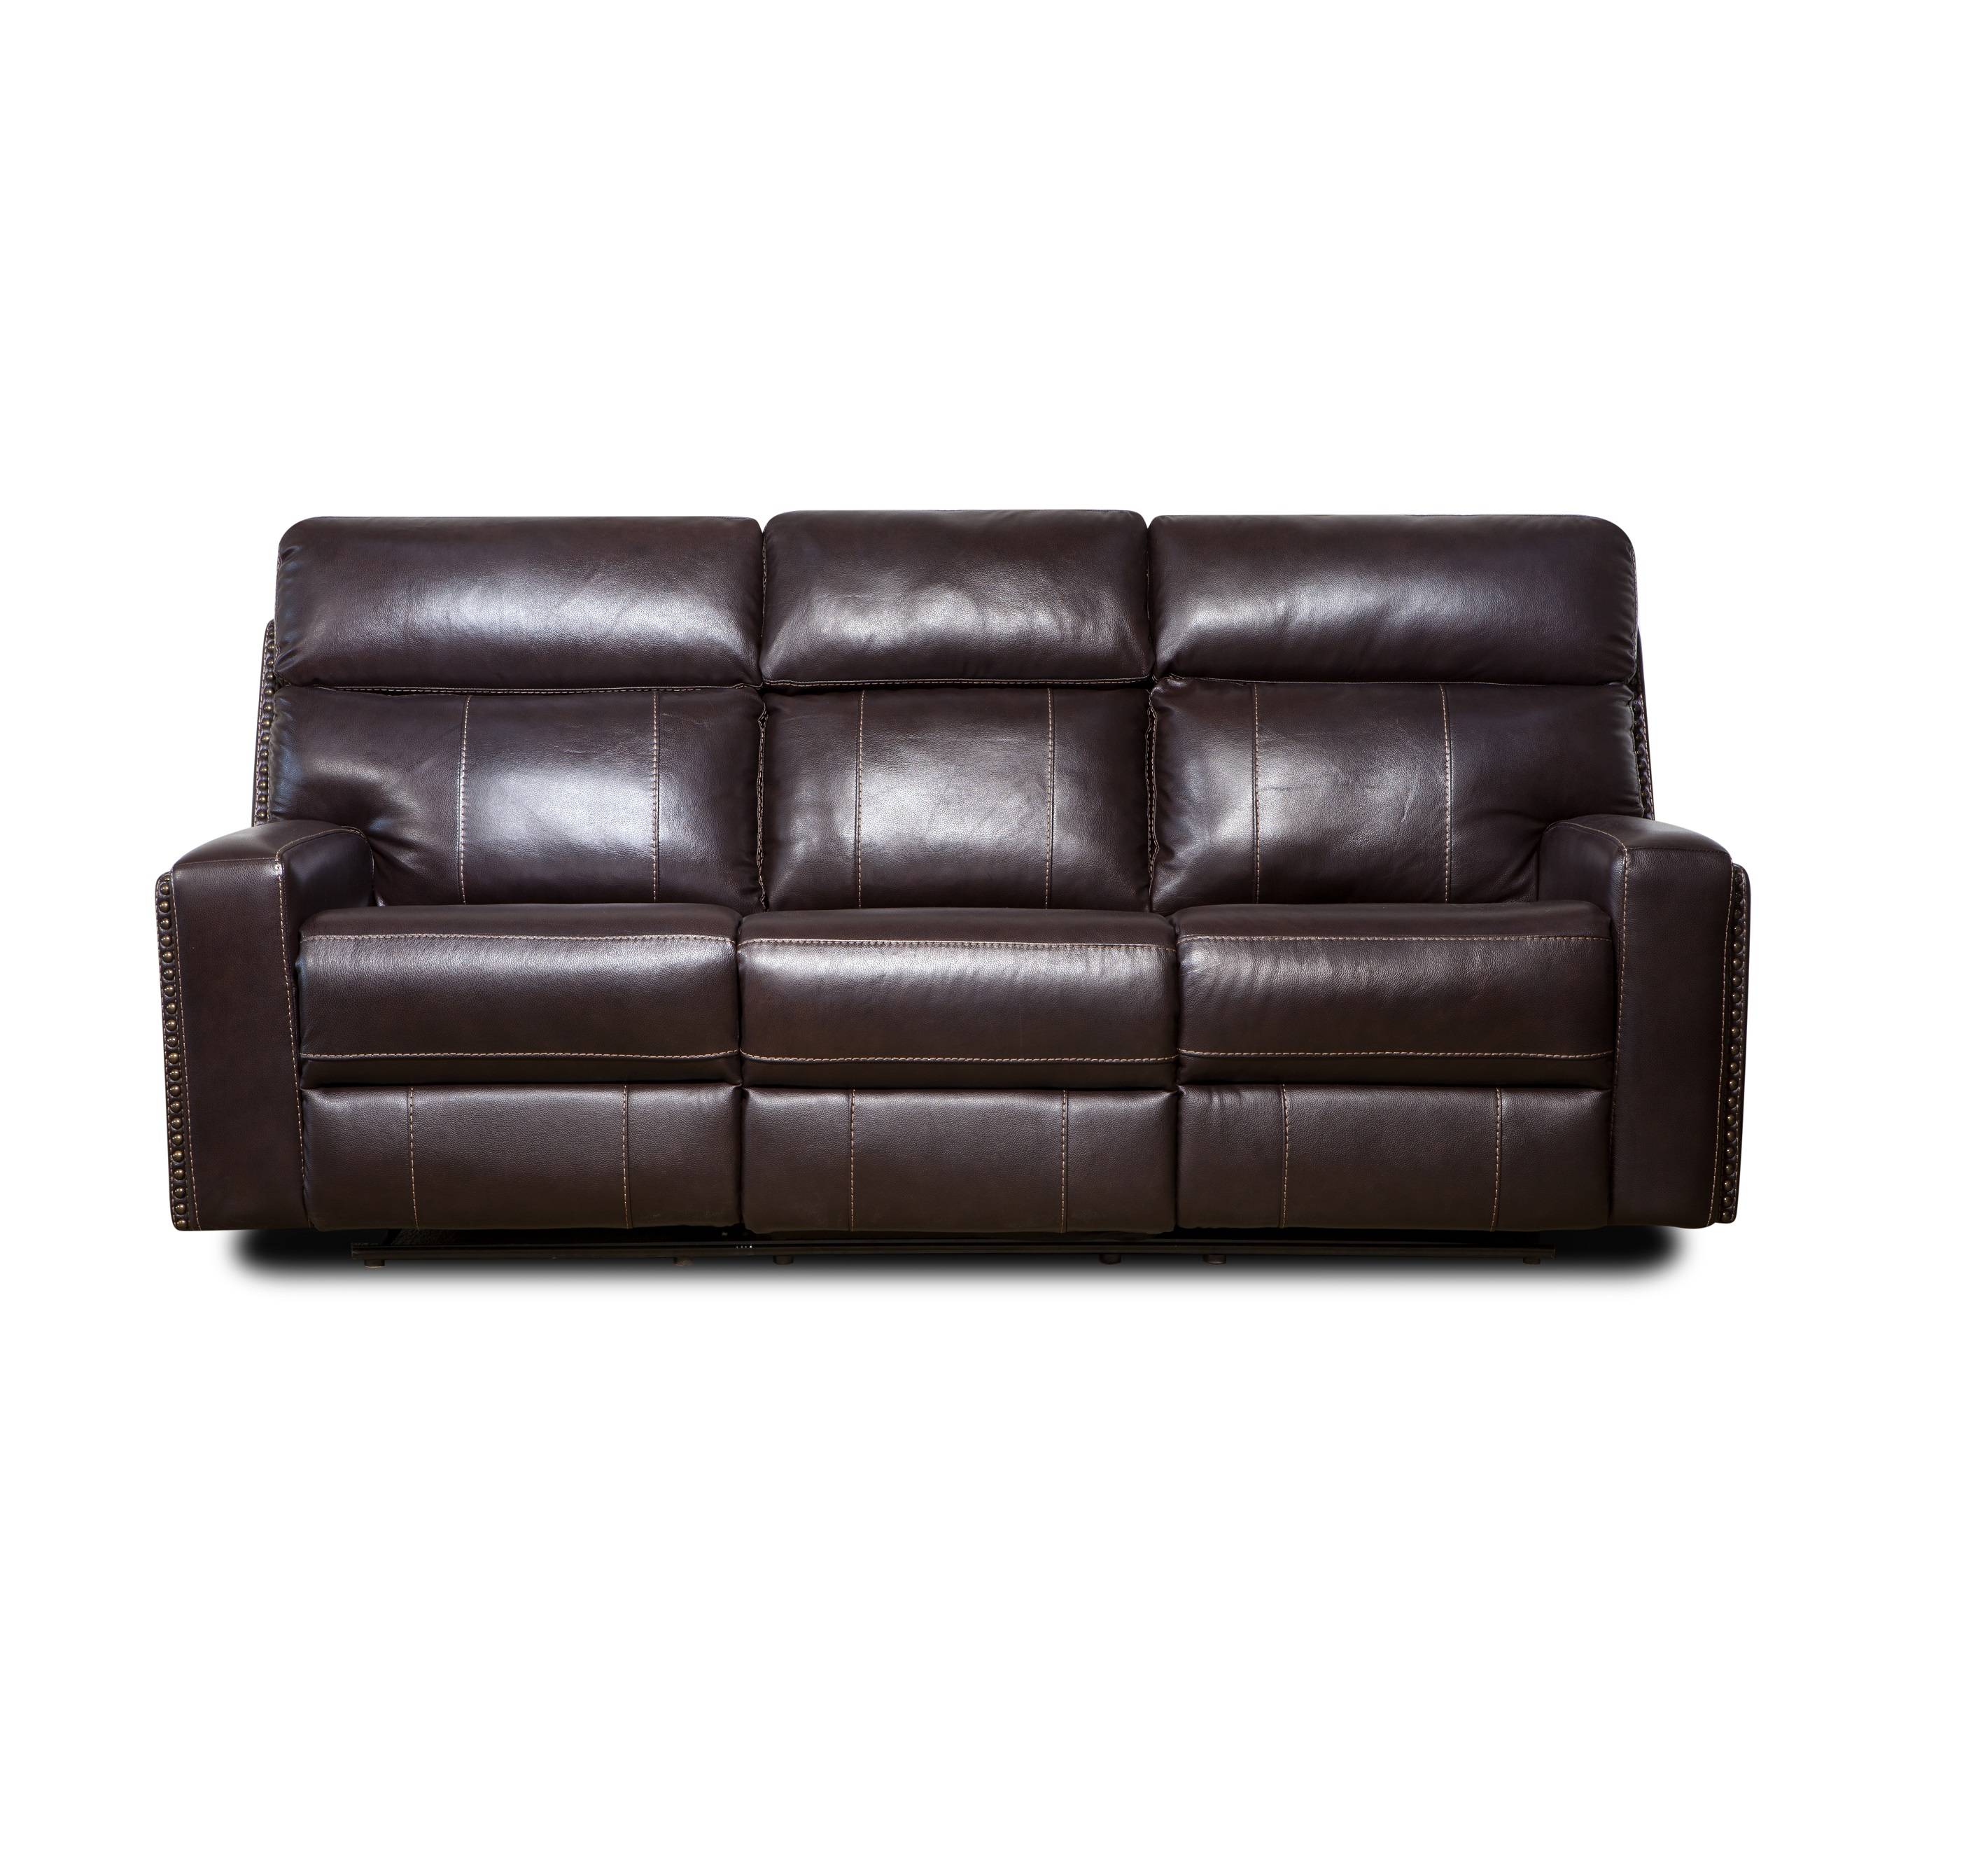 PriceList for Full Size Foam Mattress - 2019 latest recliner comfortable genuine leather 1 2 3 sofa set – Chuan Yang